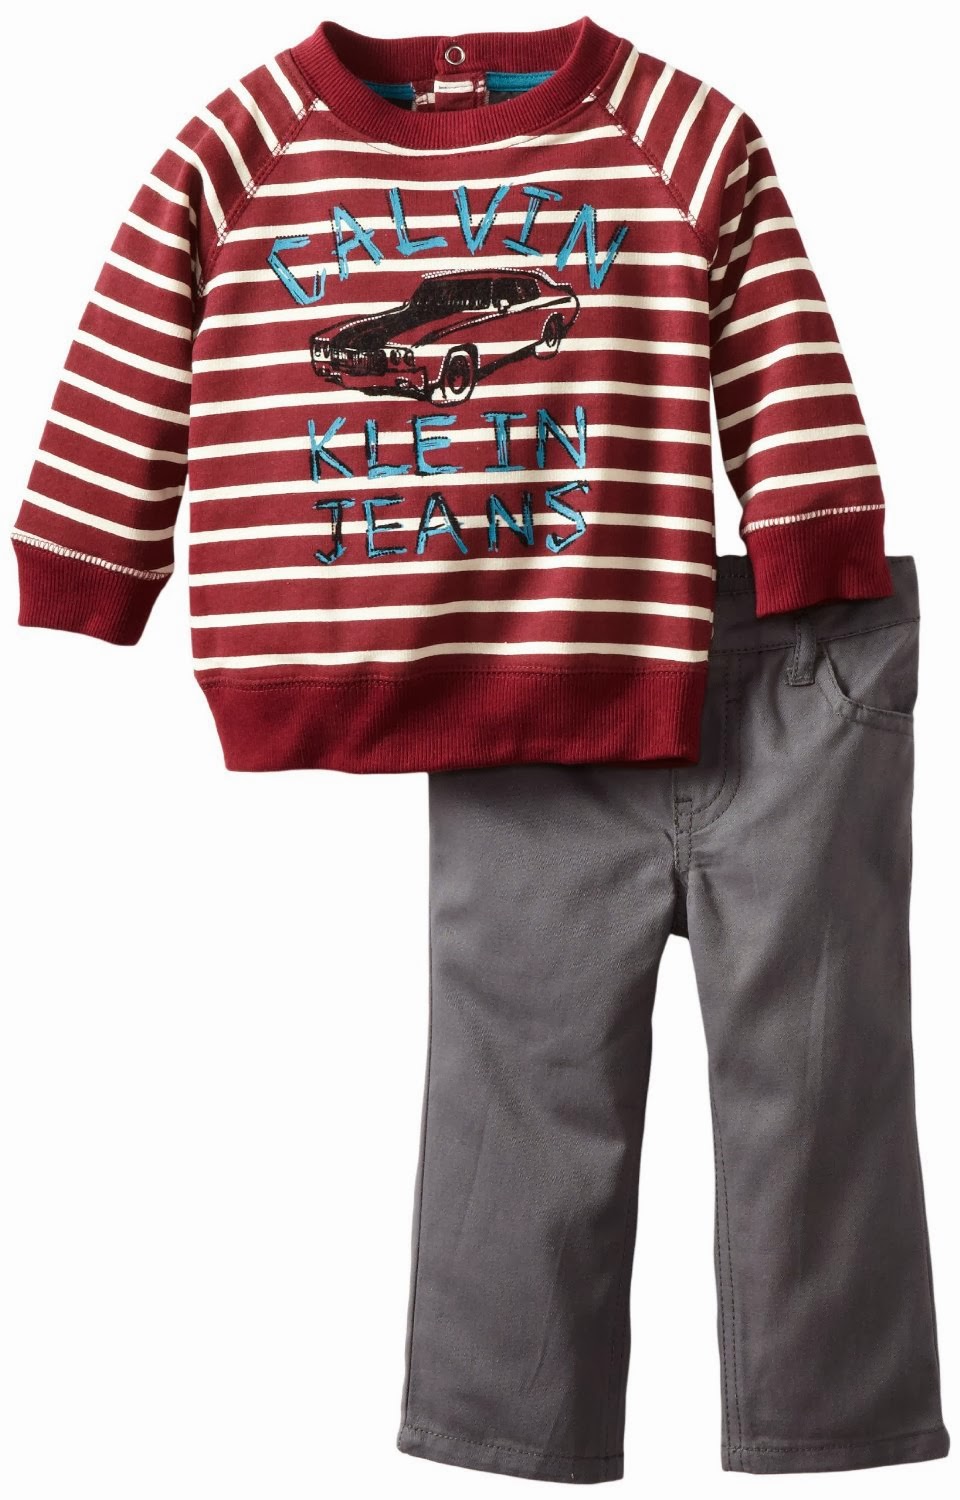 Rays Little Baju  Bayi  Bermerek Calvin Klein Untuk Bayi  